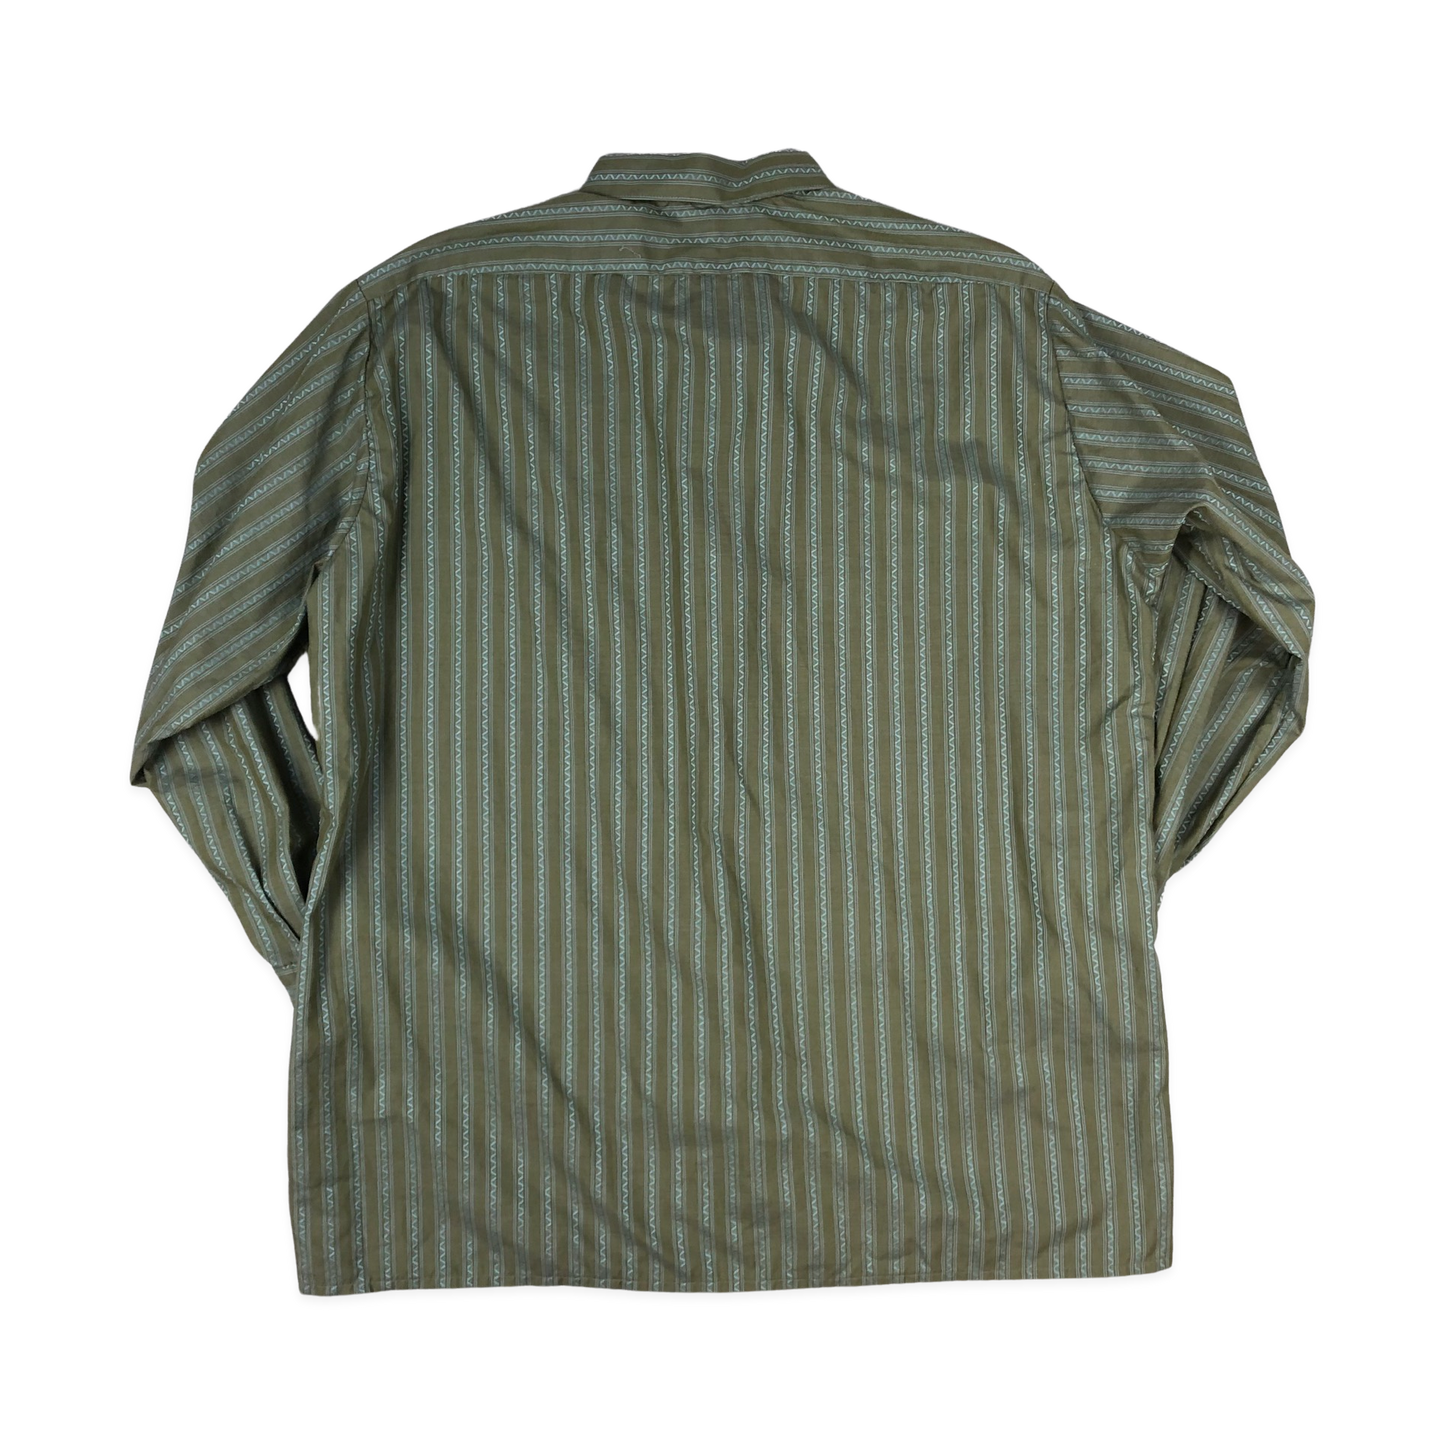 Vintage 70s Abstract Stripy Print Shirt XL